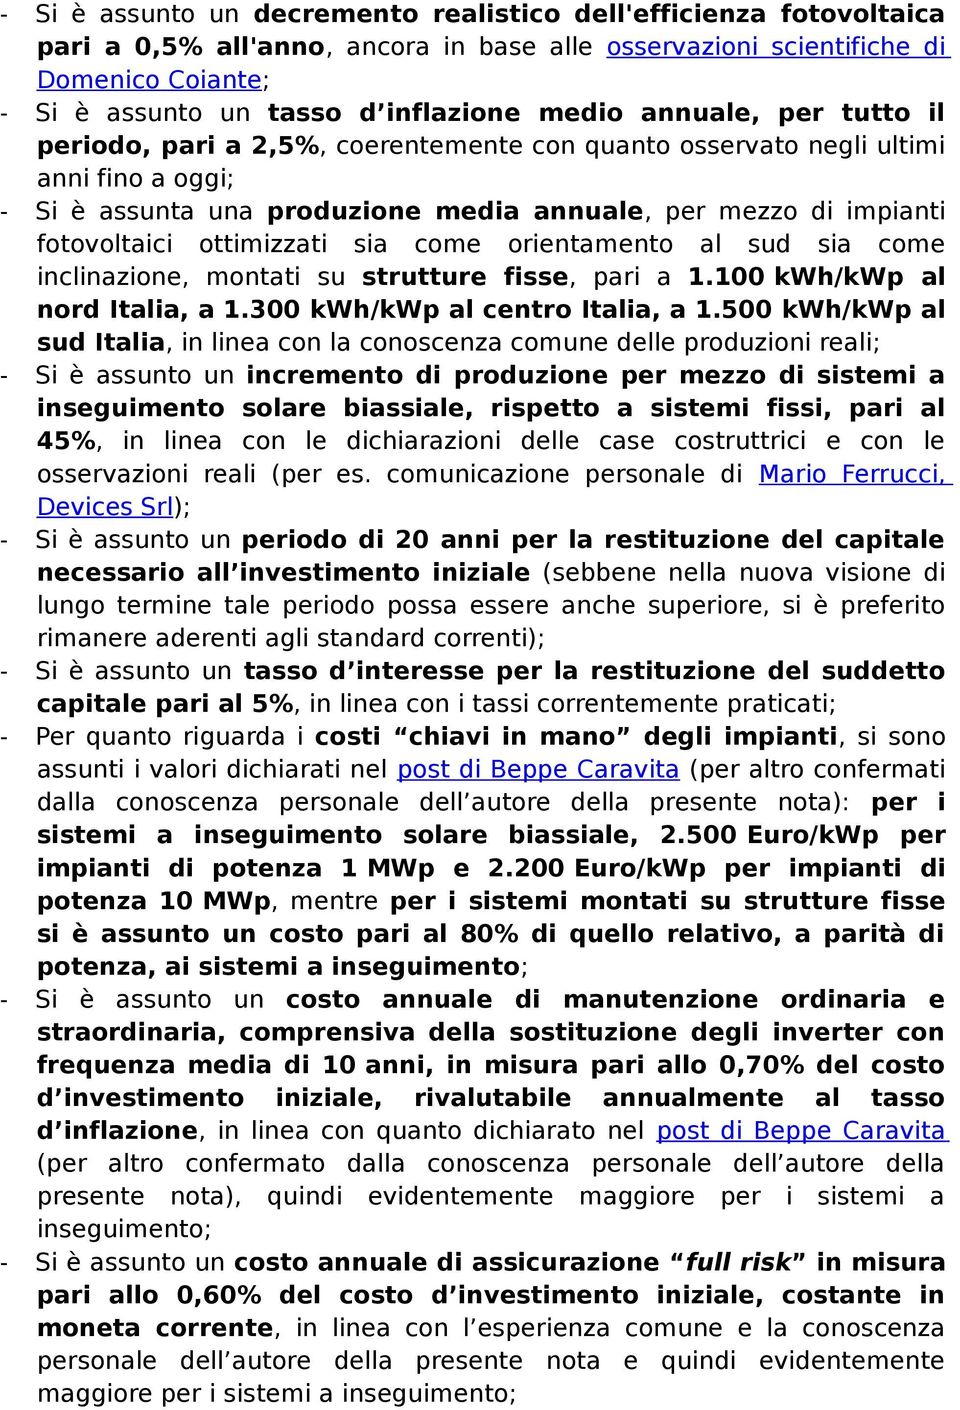 sia cme inclinazine, mntati su strutture fisse, pari a 1.100 kwh/kwp al nrd Italia, a 1.300 kwh/kwp al centr Italia, a 1.